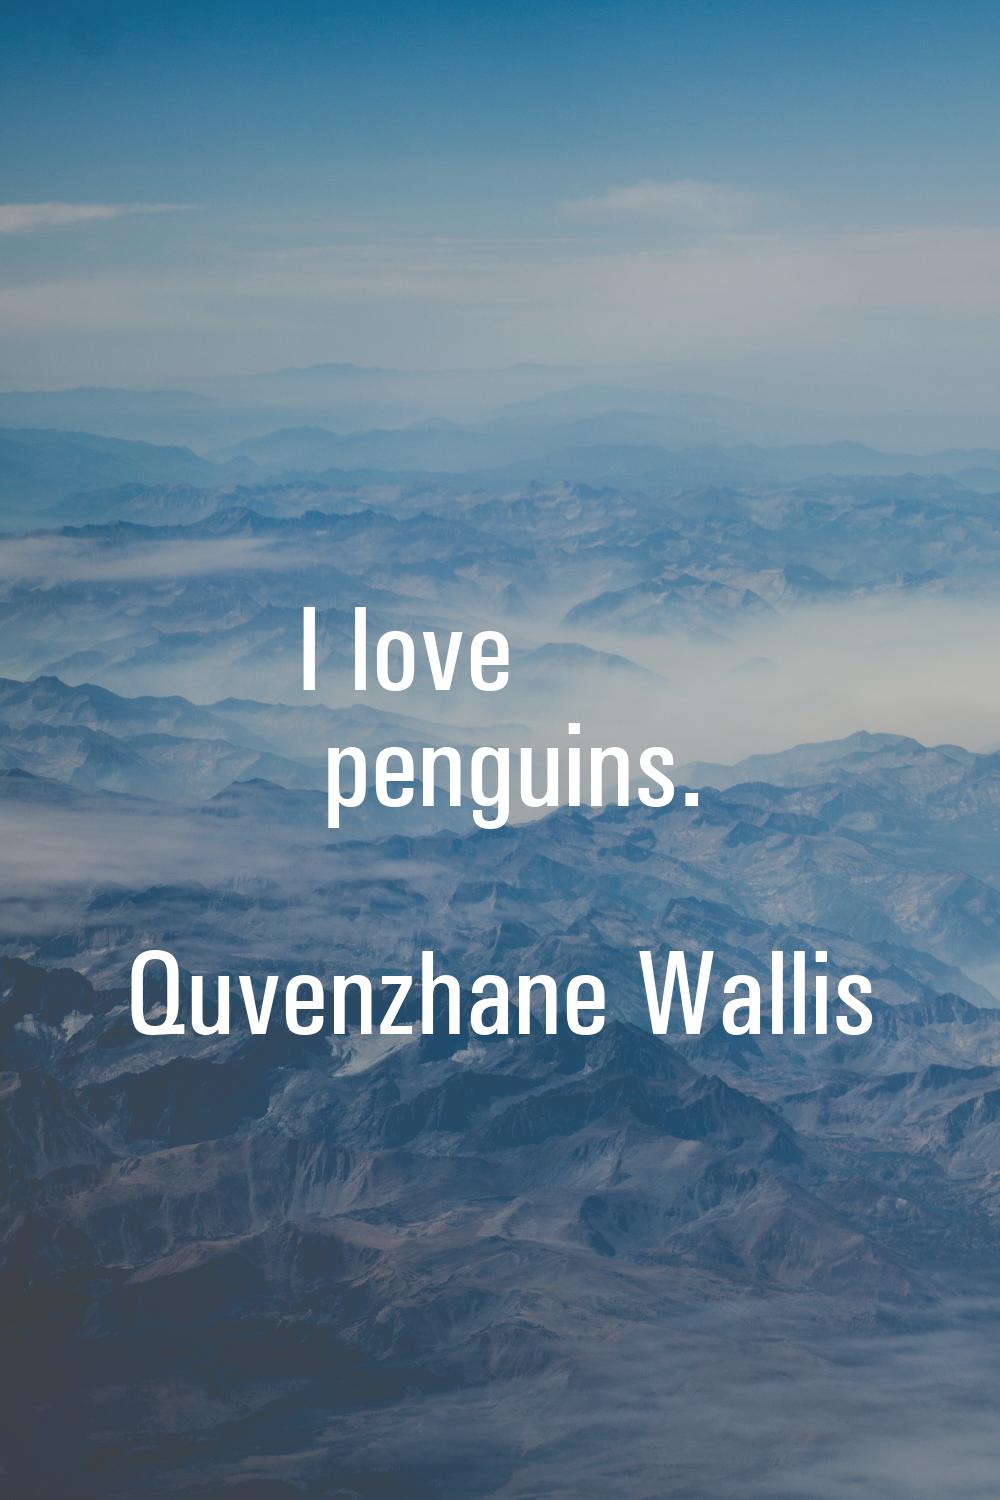 I love penguins.